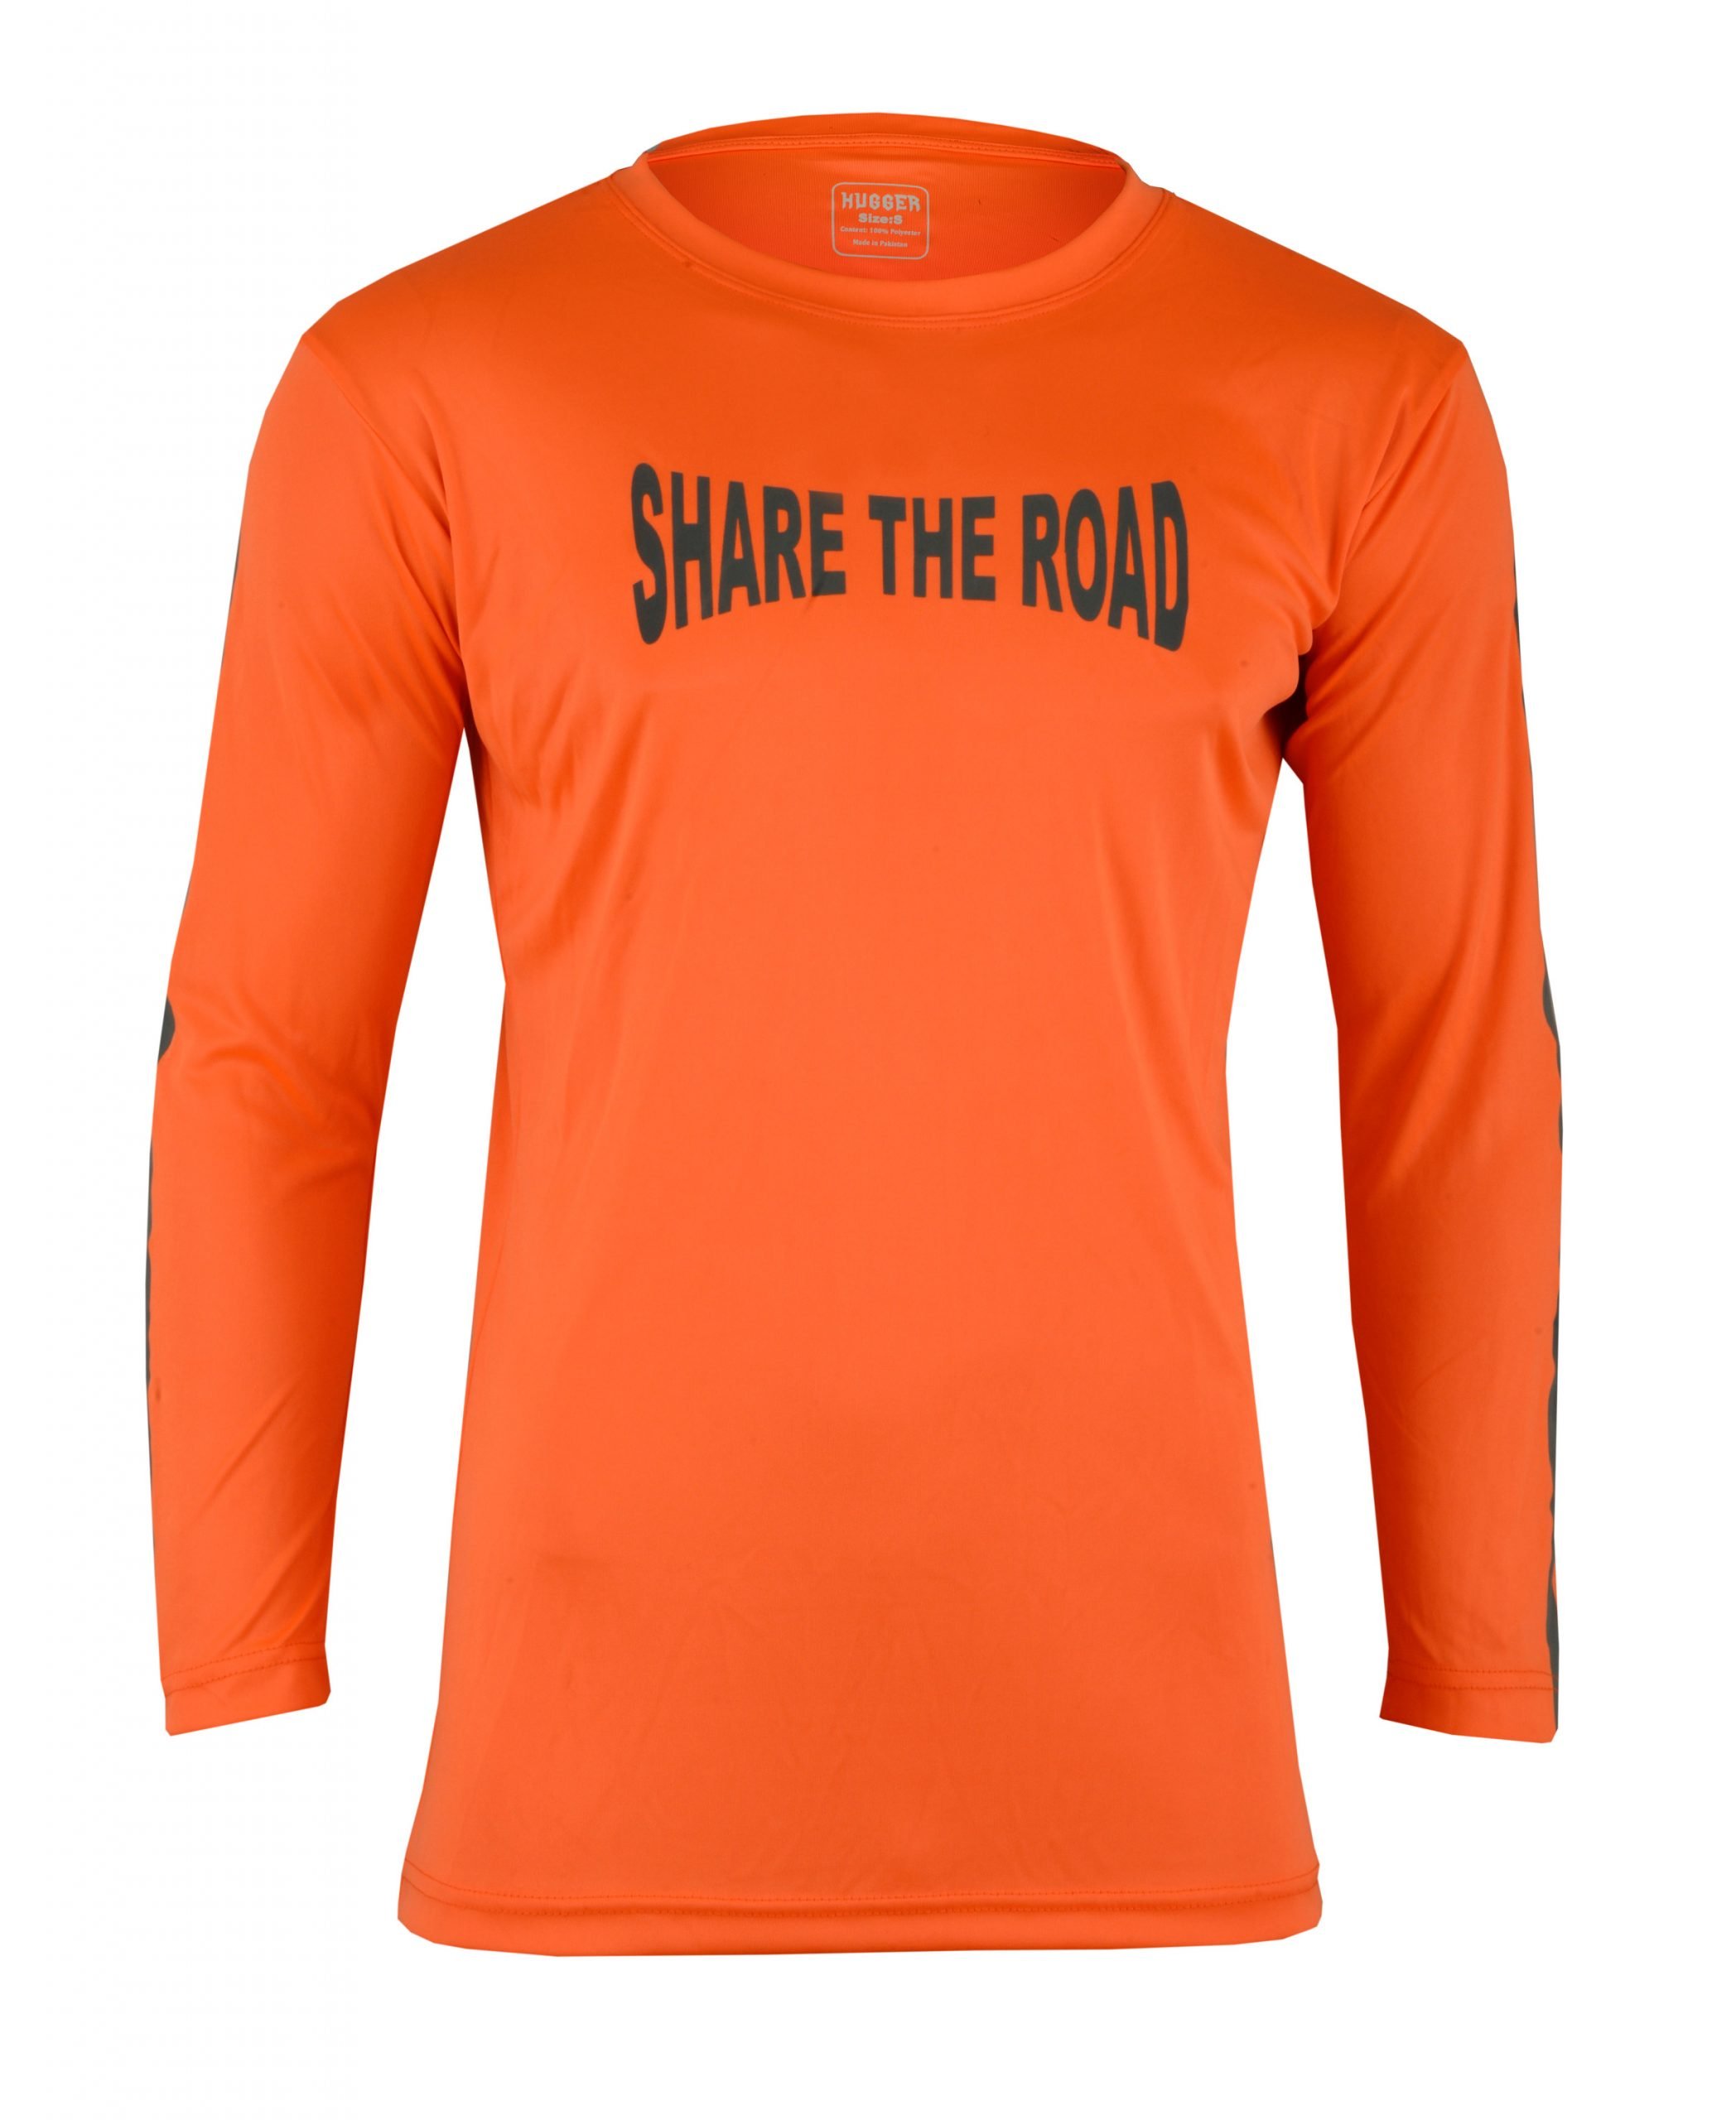 Men's Reflective Shirt -Share the Road-Orange